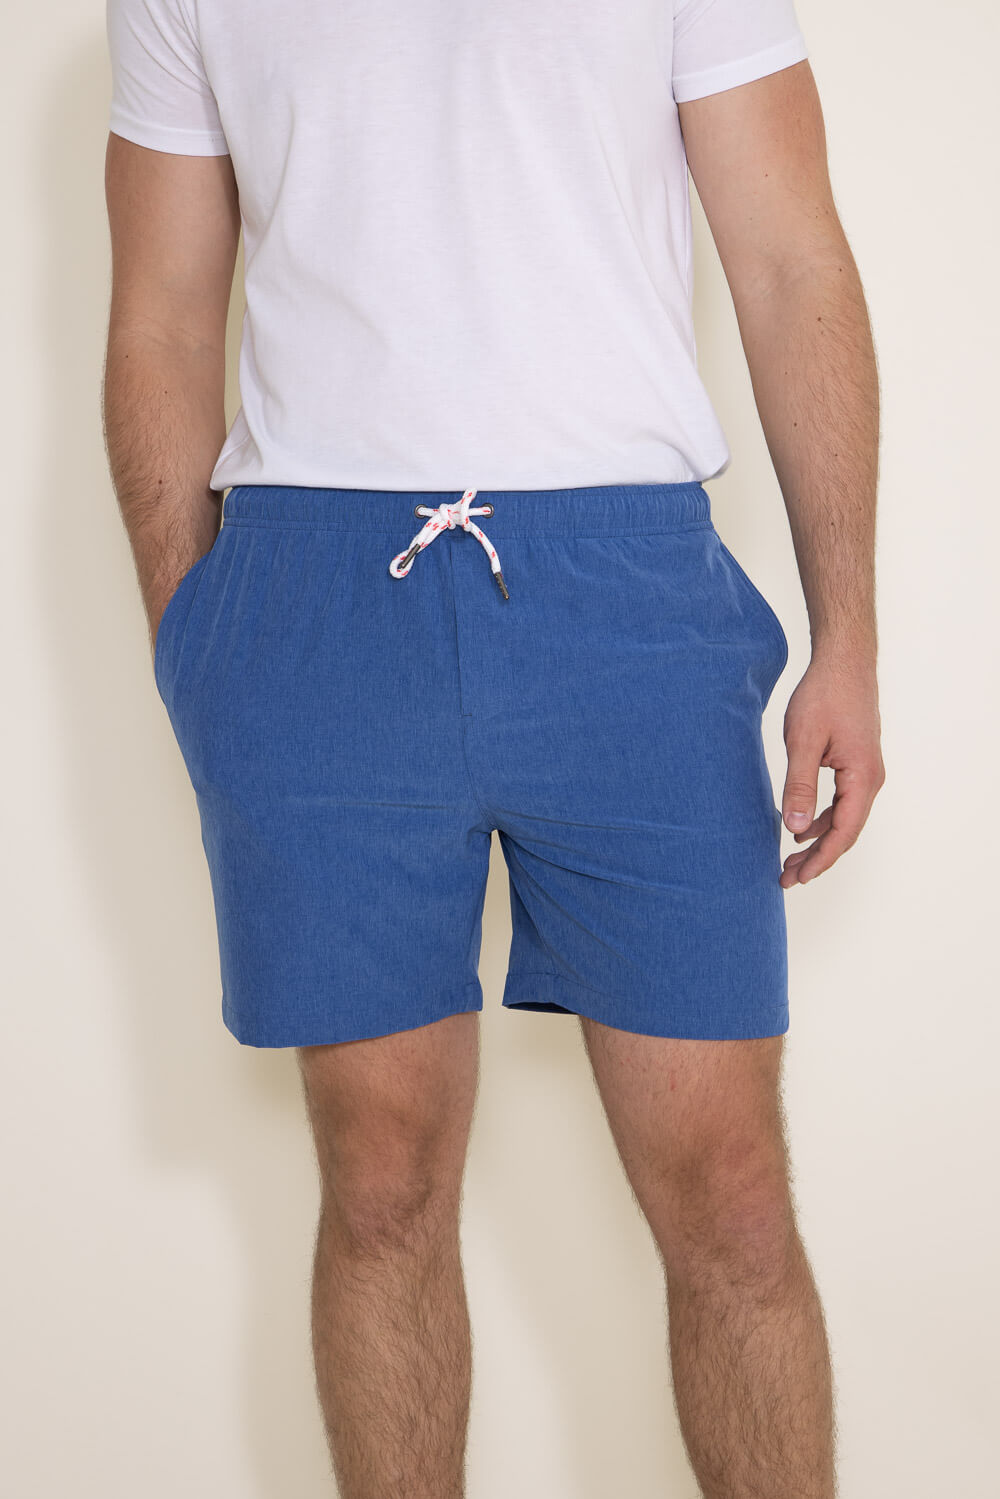 Vintage Summer Premium Stripe Volley Swim Shorts for Men in Denim Blue at Glik's , M